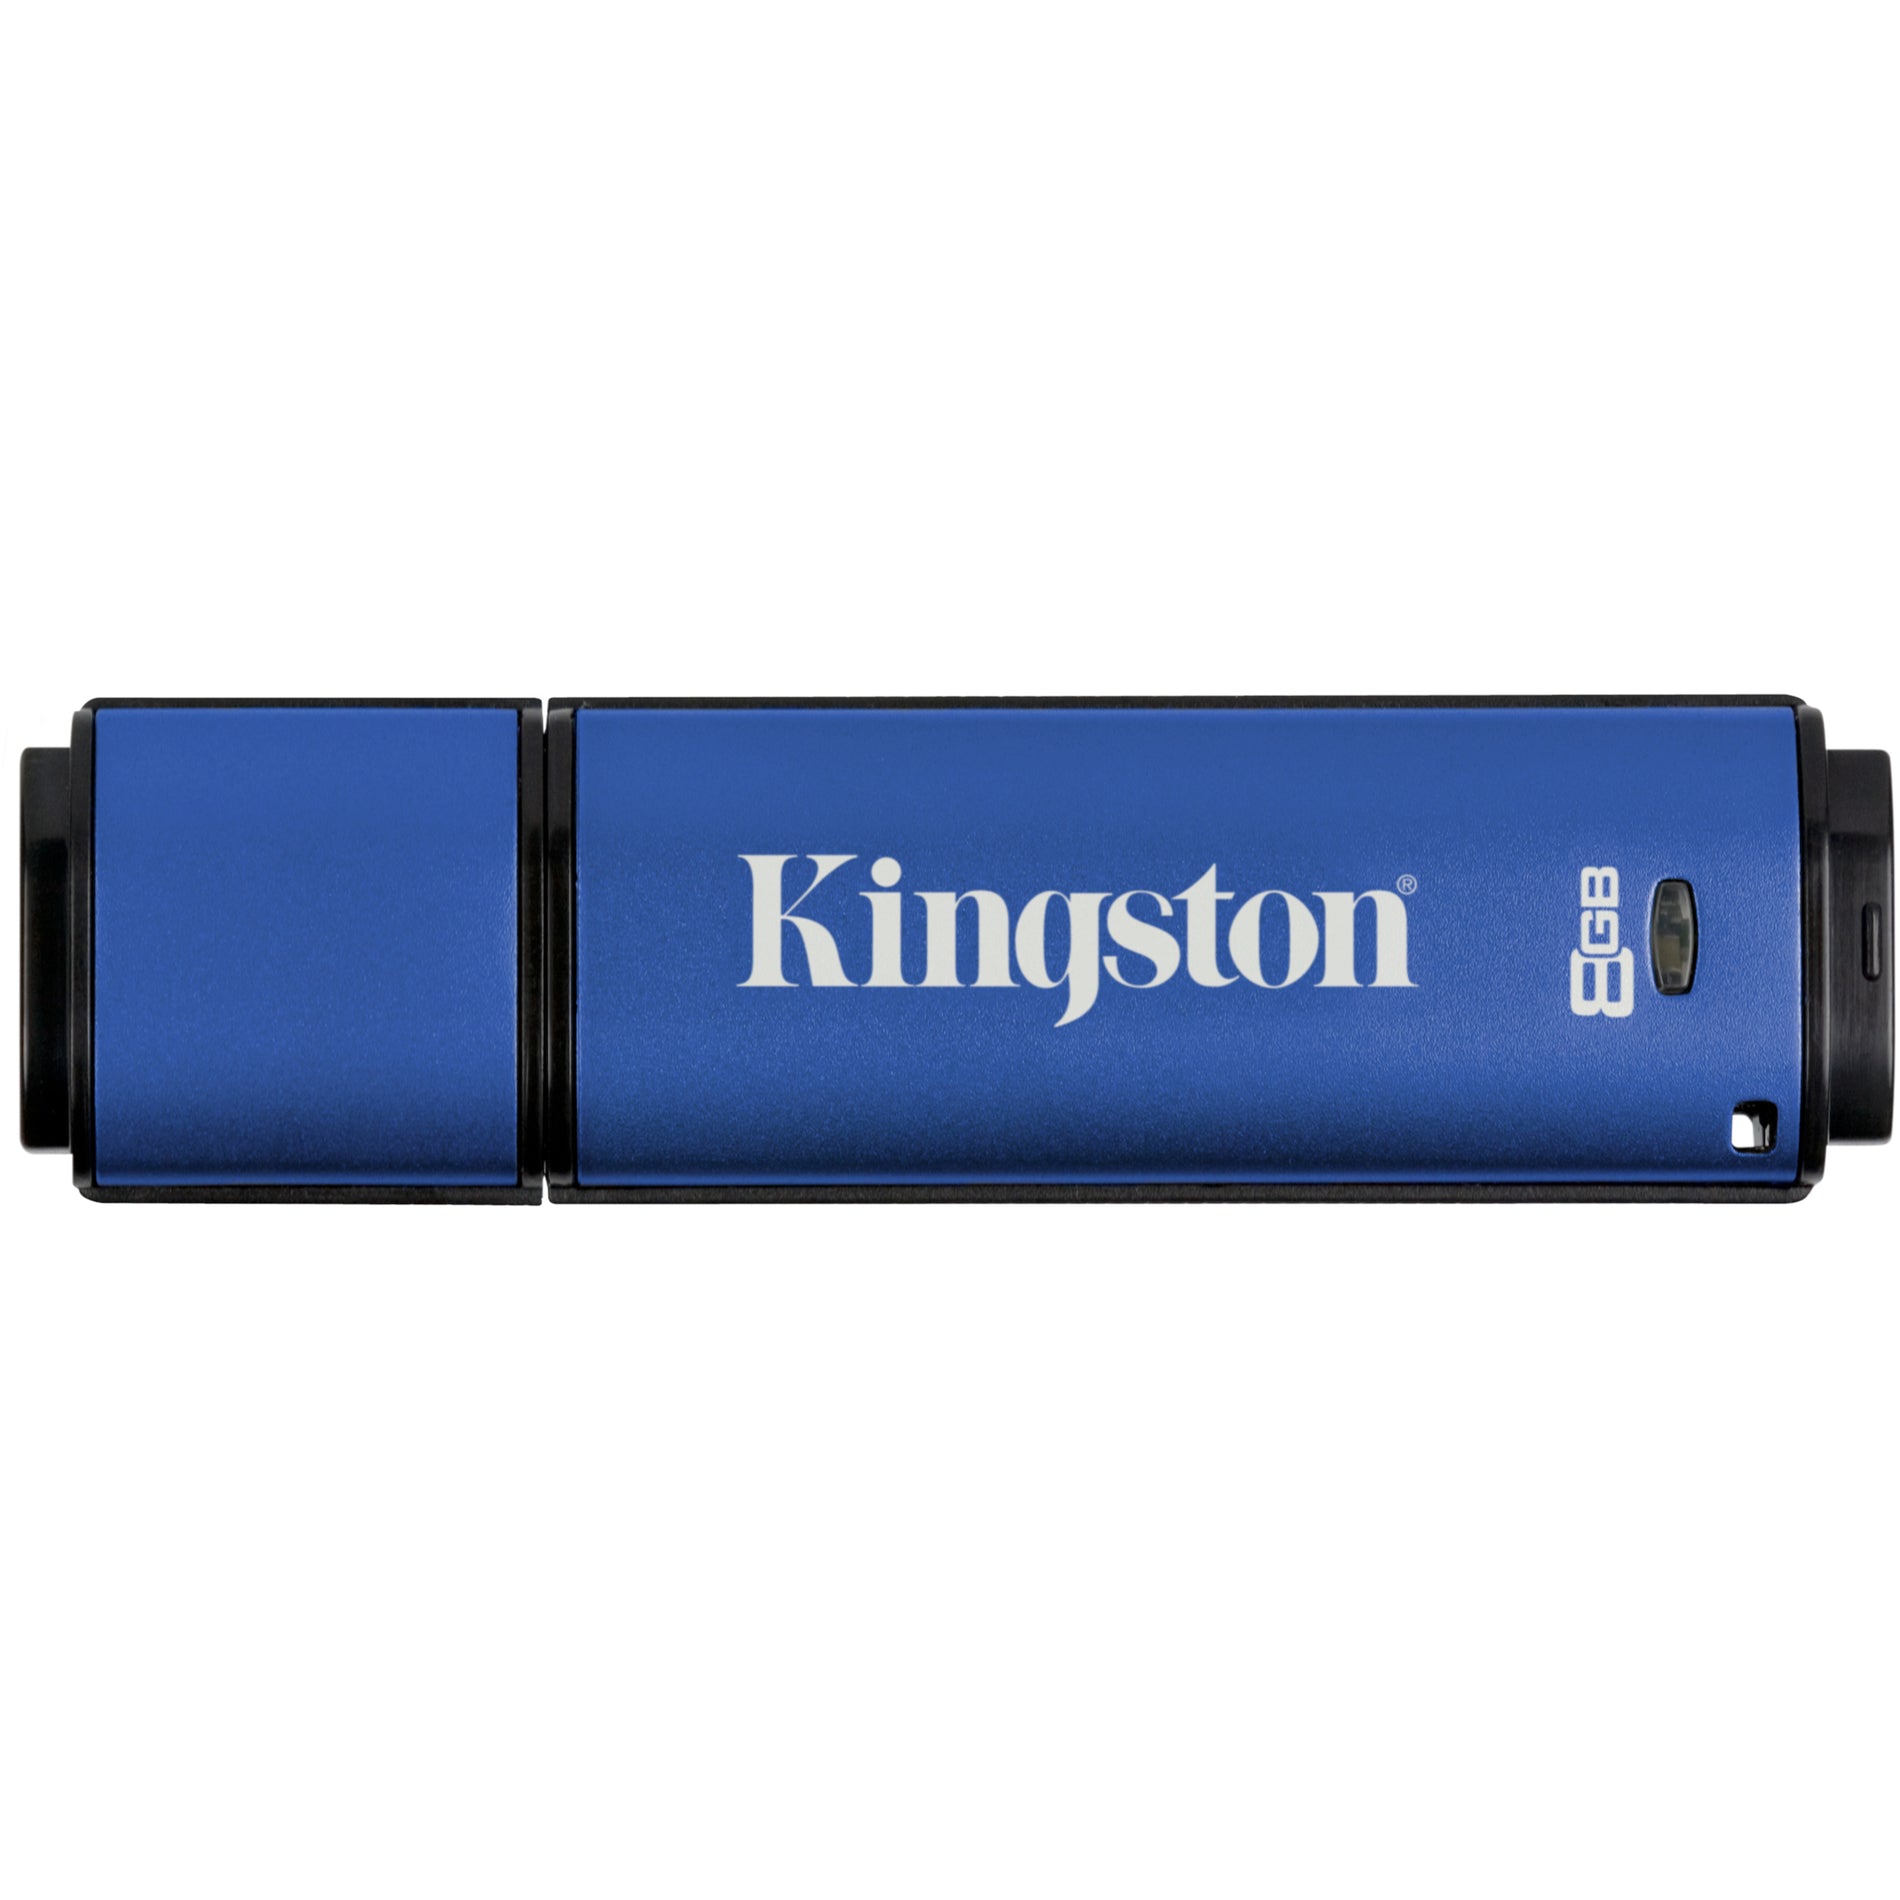 Kingston DTVP30/8GB DataTraveler Vault Privacy 3.0 USB 3.0 Flash Drive, 8GB Storage, Password Protection, Encryption Support